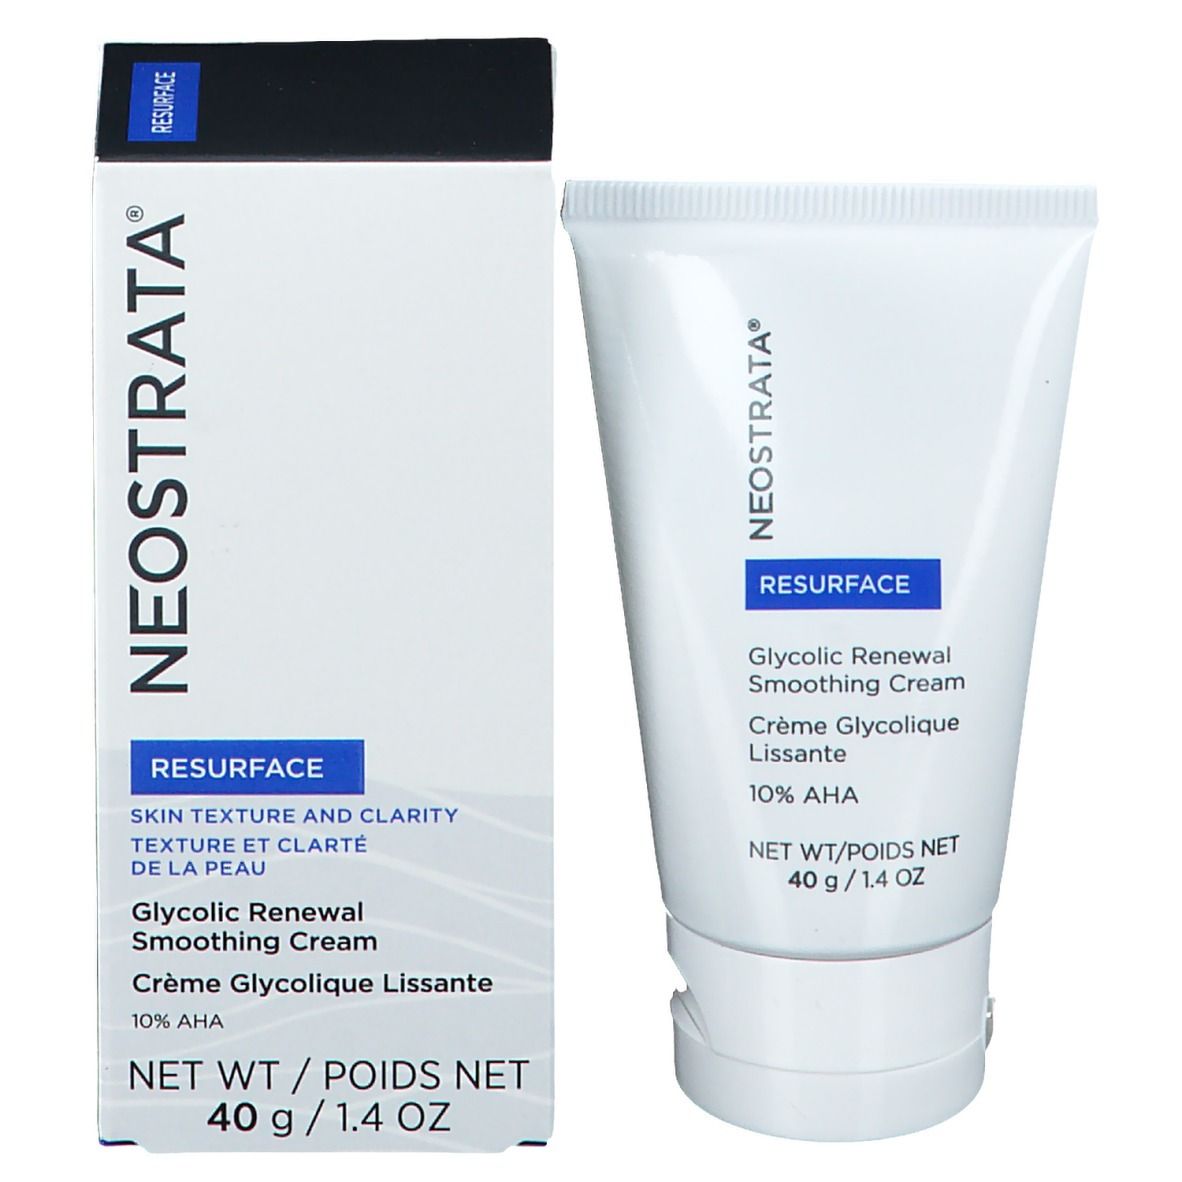 NeoStrata® Resurface Glycolic Renewal Smoothing Cream 10 AHA